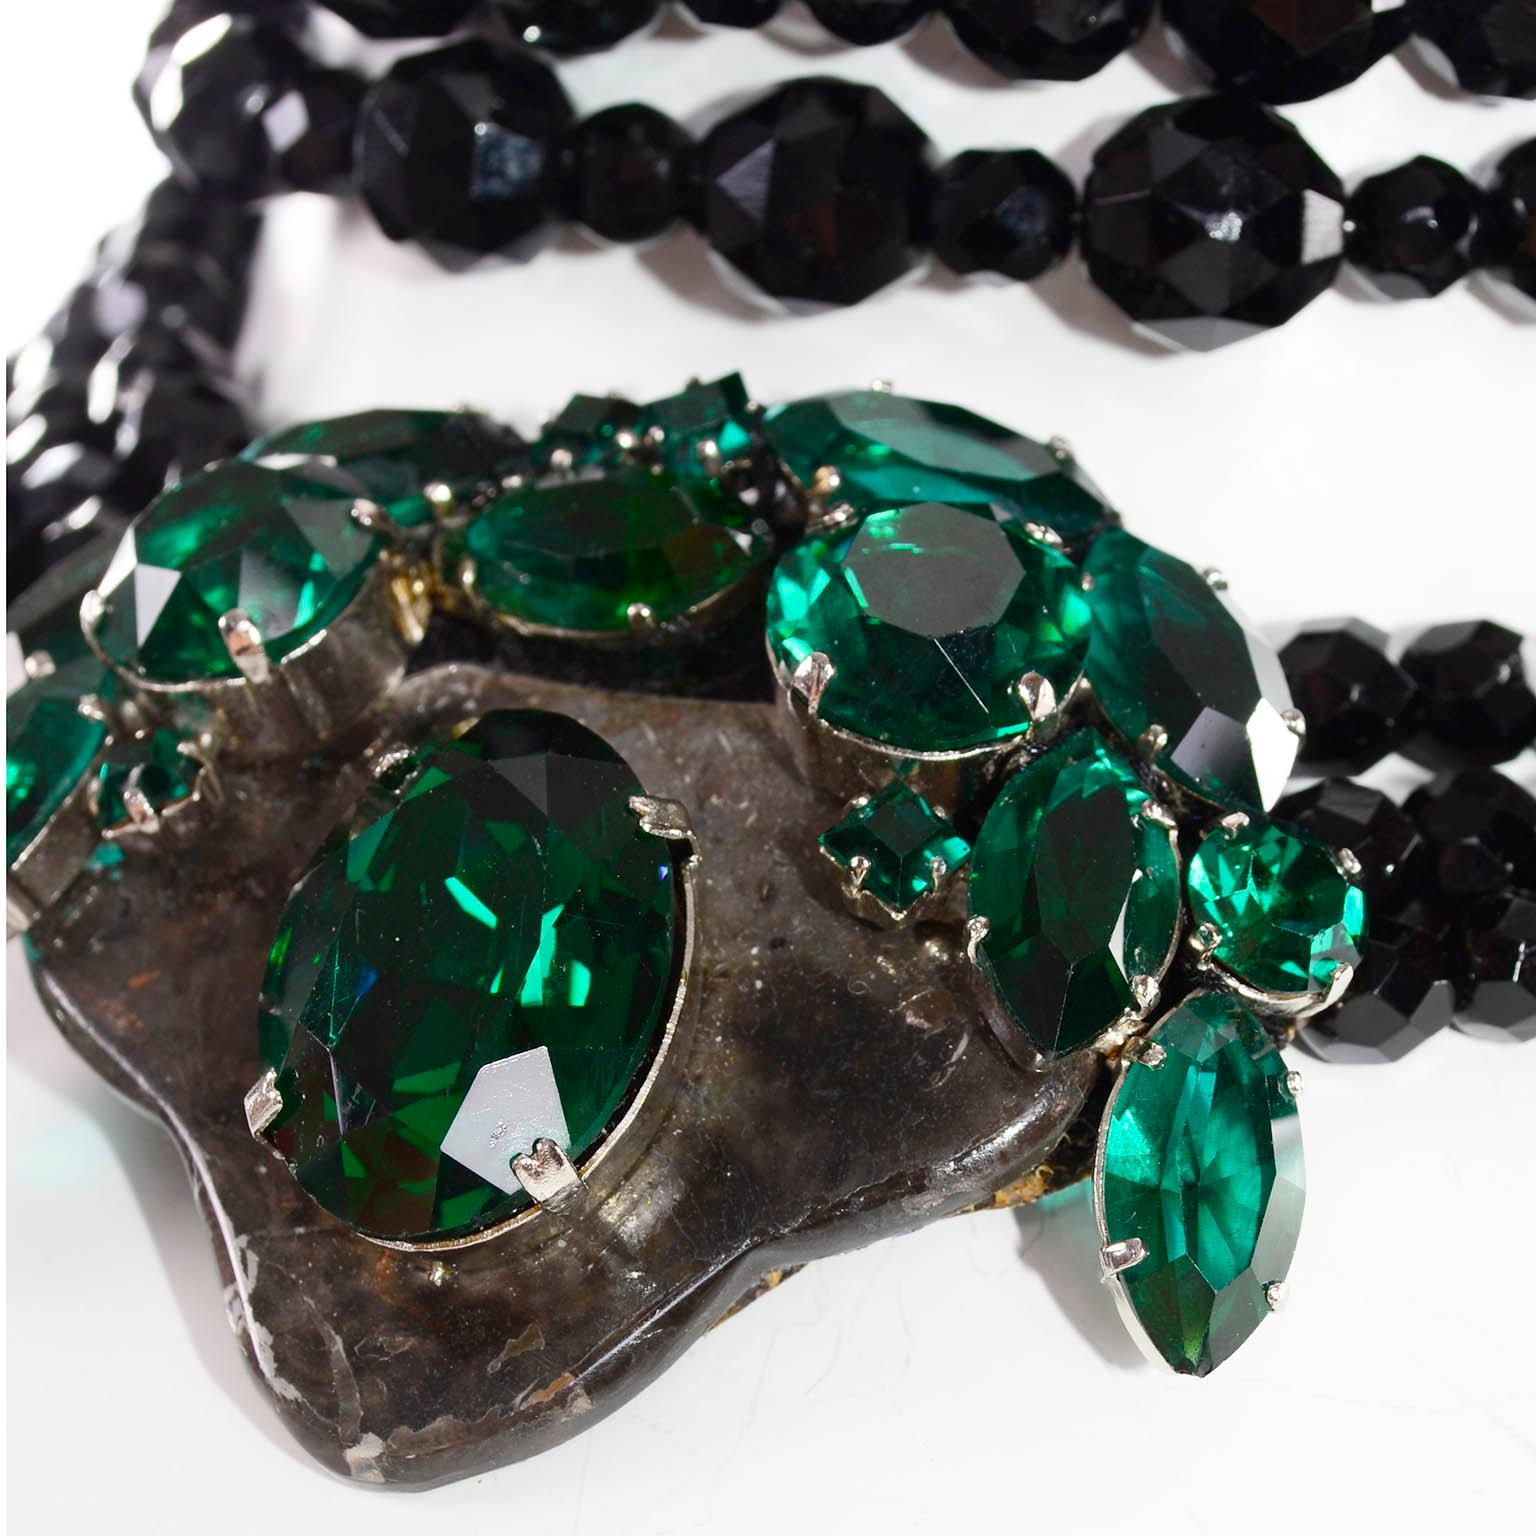 Women's Erare 1980s Emanuel Ungaro Couture Black & Green Choker Mughal Inspired Necklace